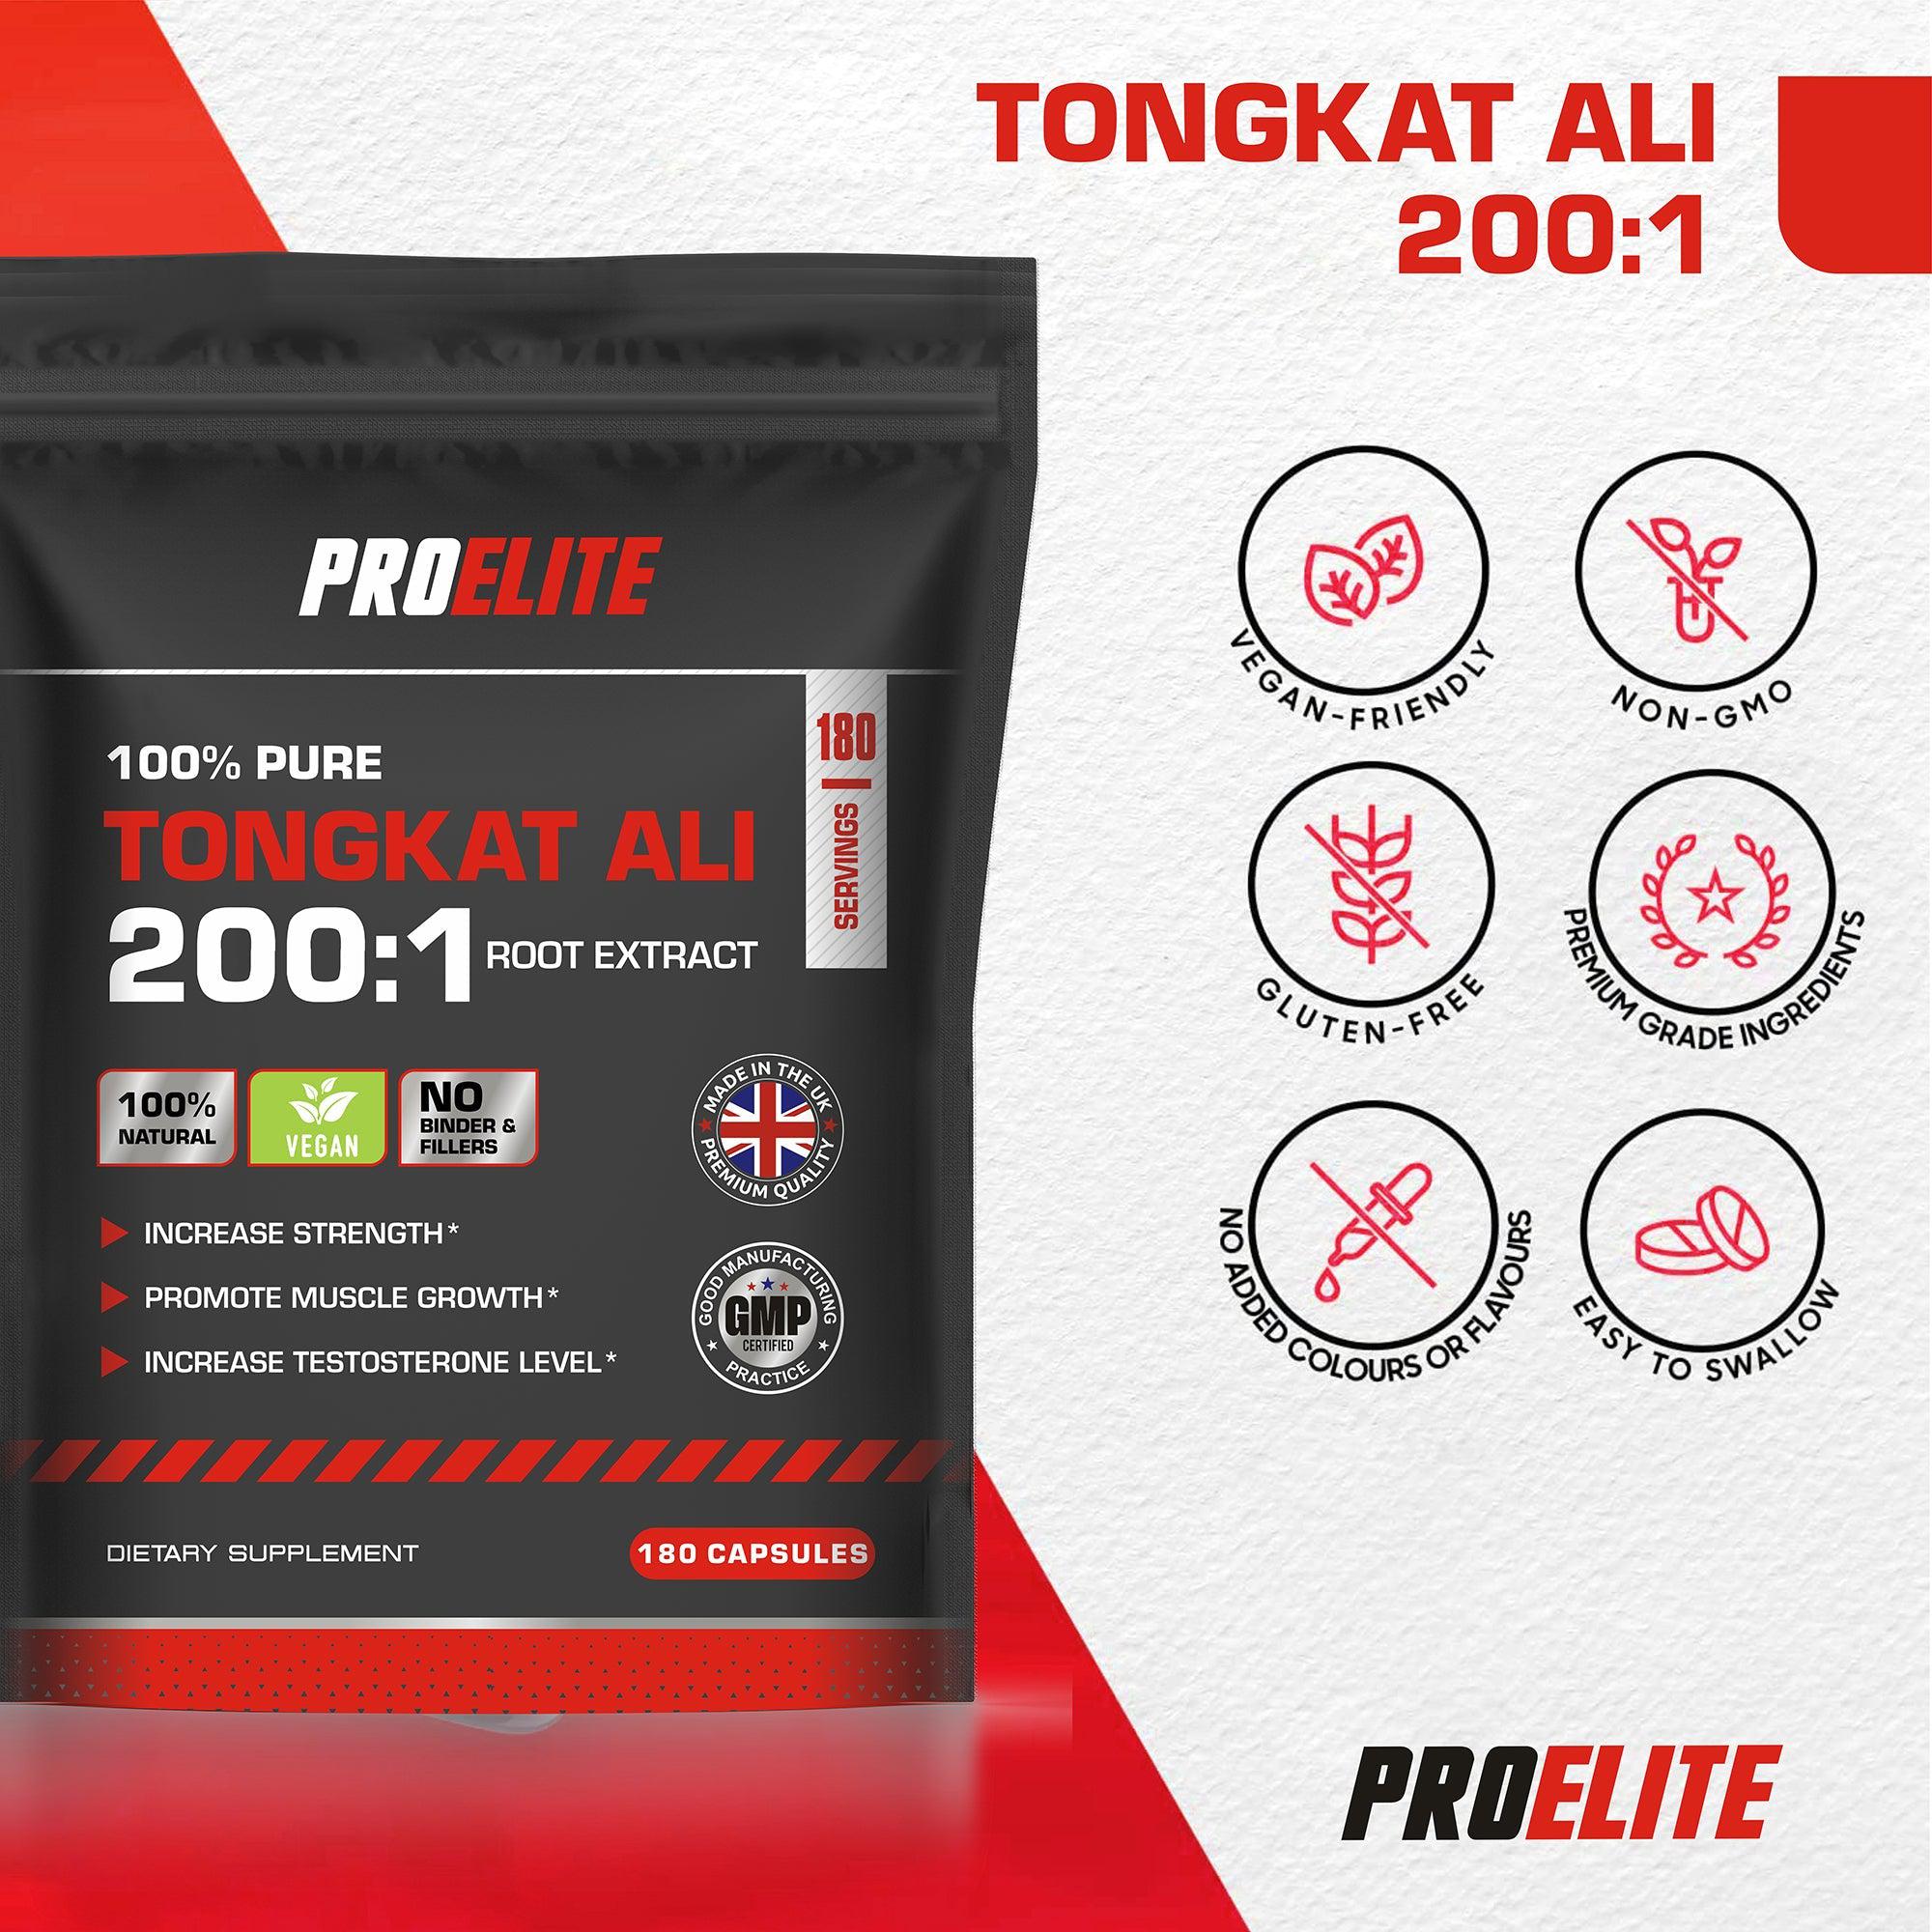 Pro-Elite Tongkat Ali 200:1 Extract 60 VCapsules-Testosterone Boosters-Pro-Elite-London Supplements